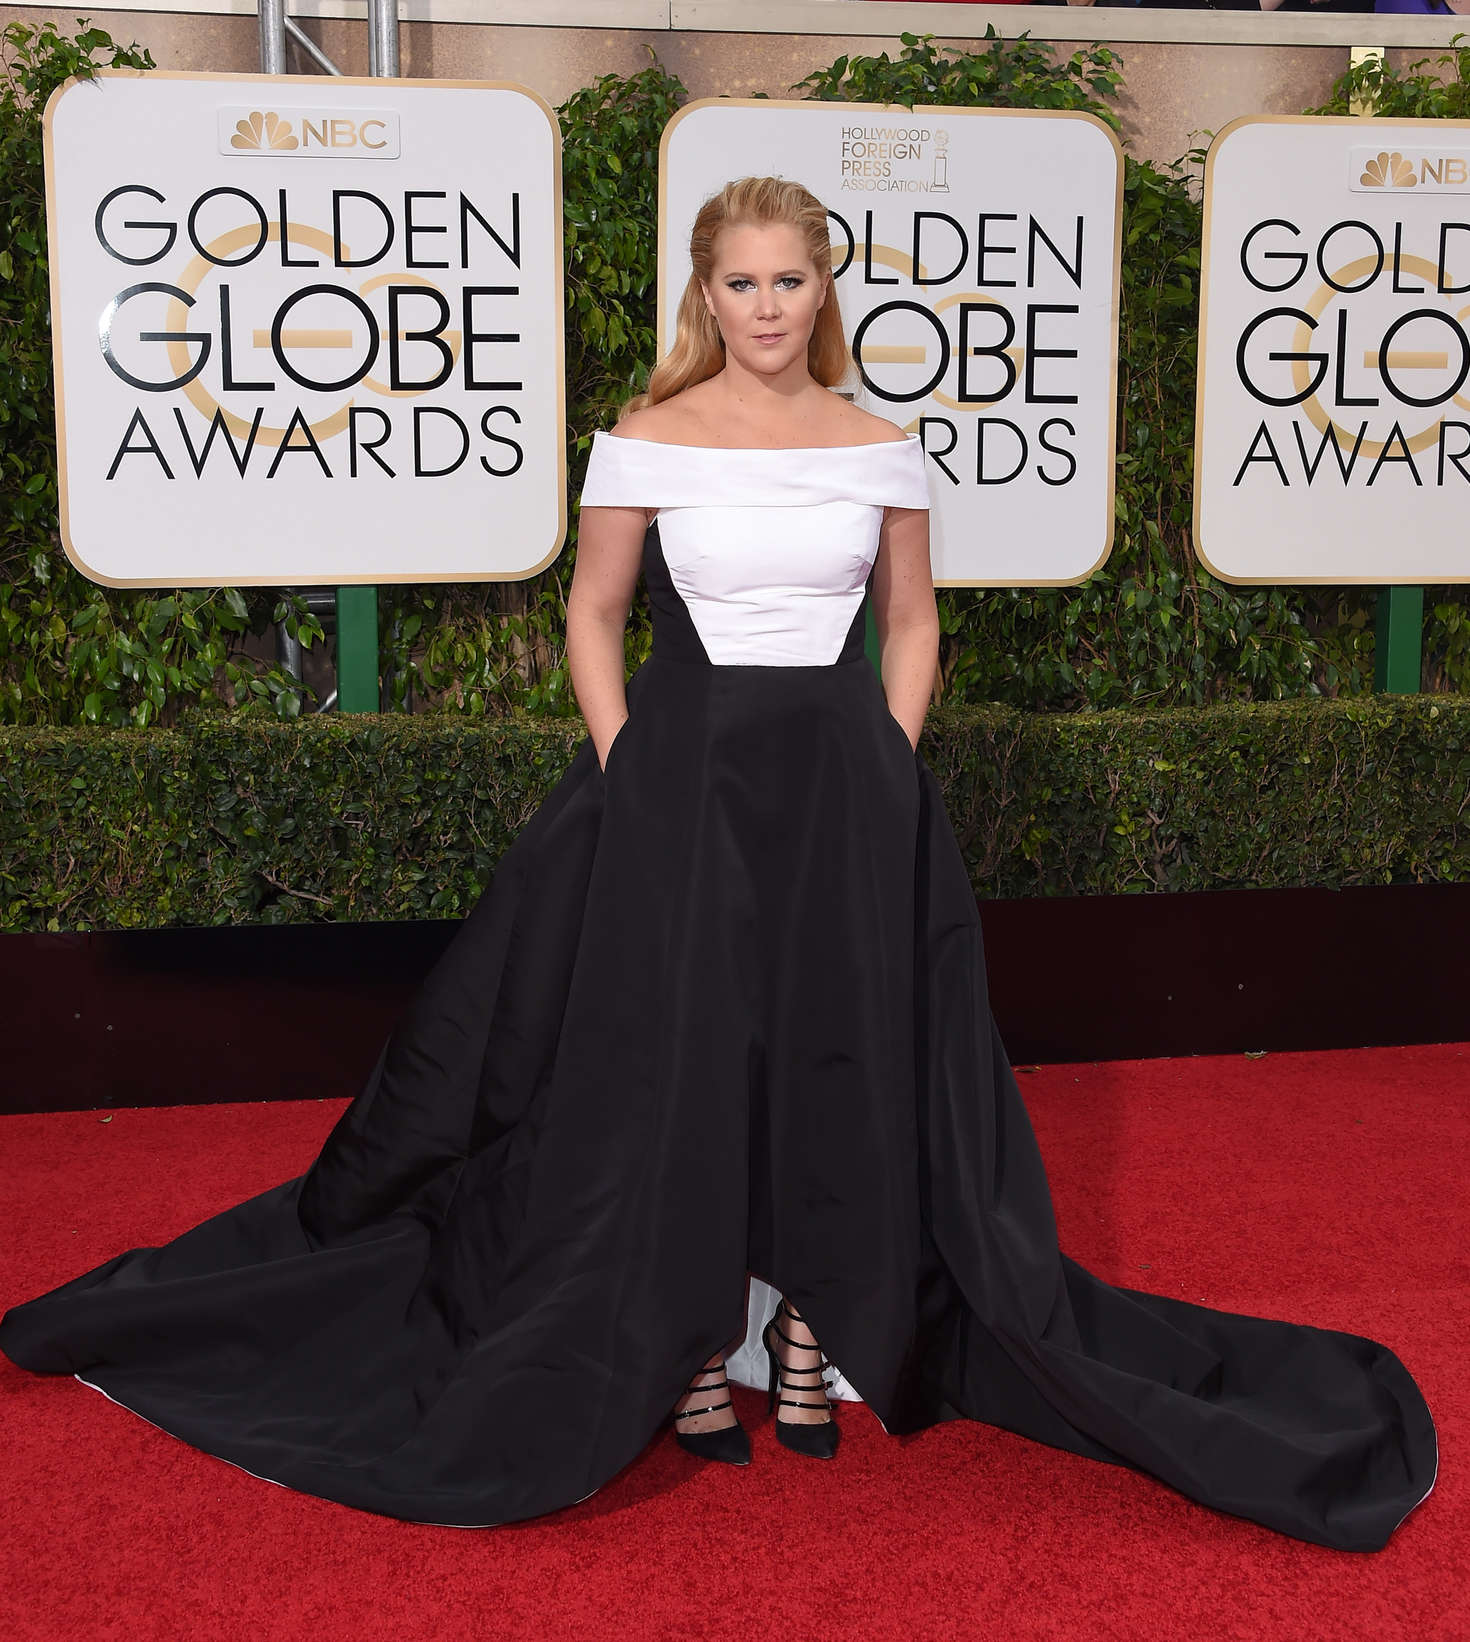 Amy Schumer - 2016 Golden Globe Awards in Beverly Hills